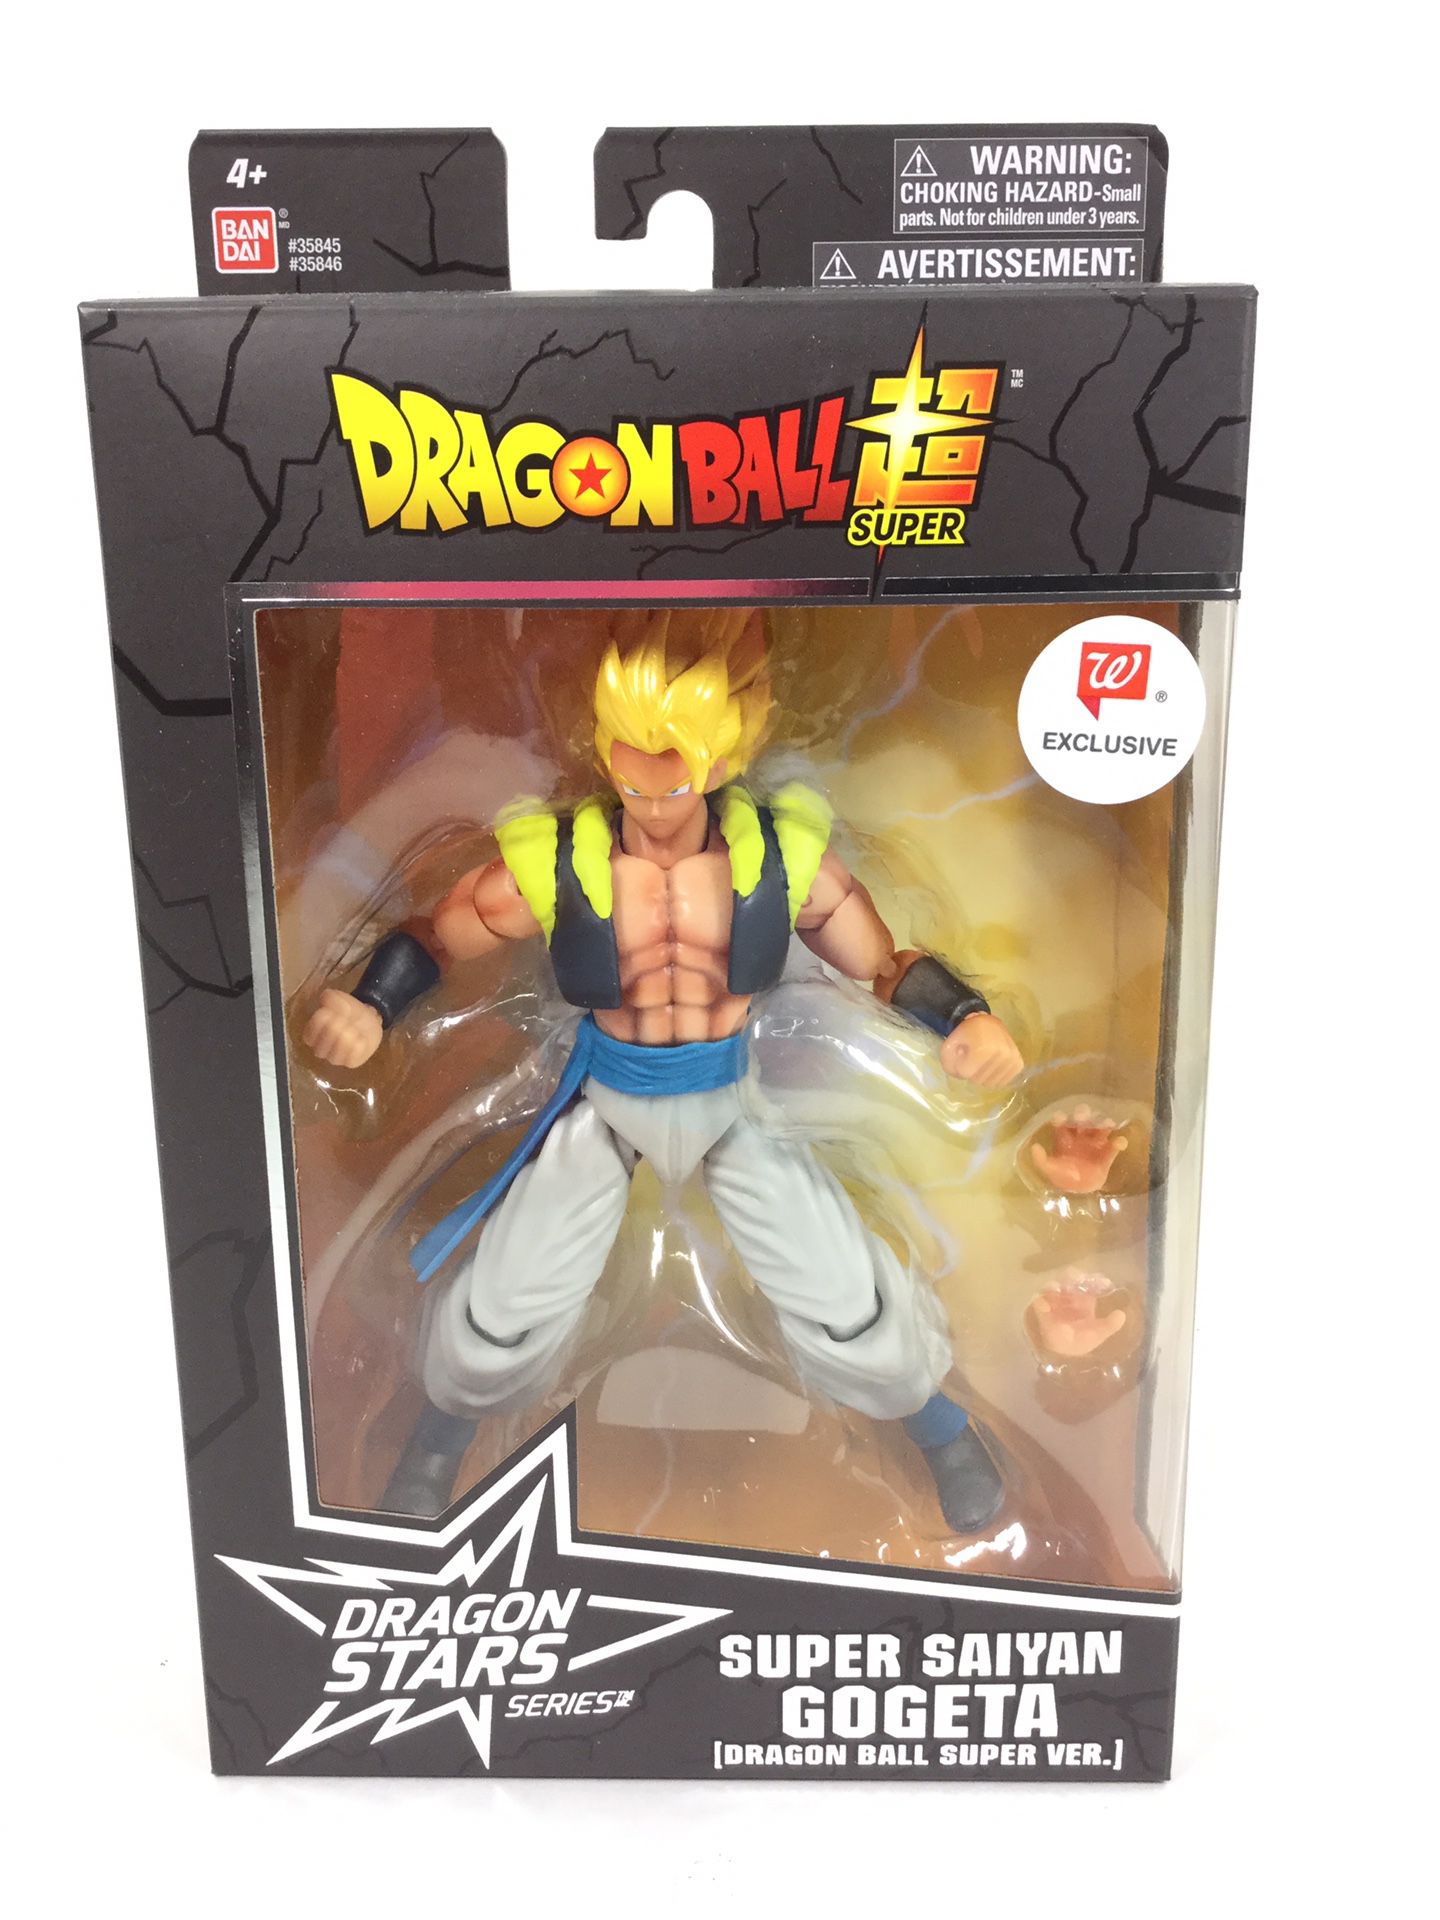 Dragon Ball Z / DBZ Super Super Saiyan Gogeta Action Figure